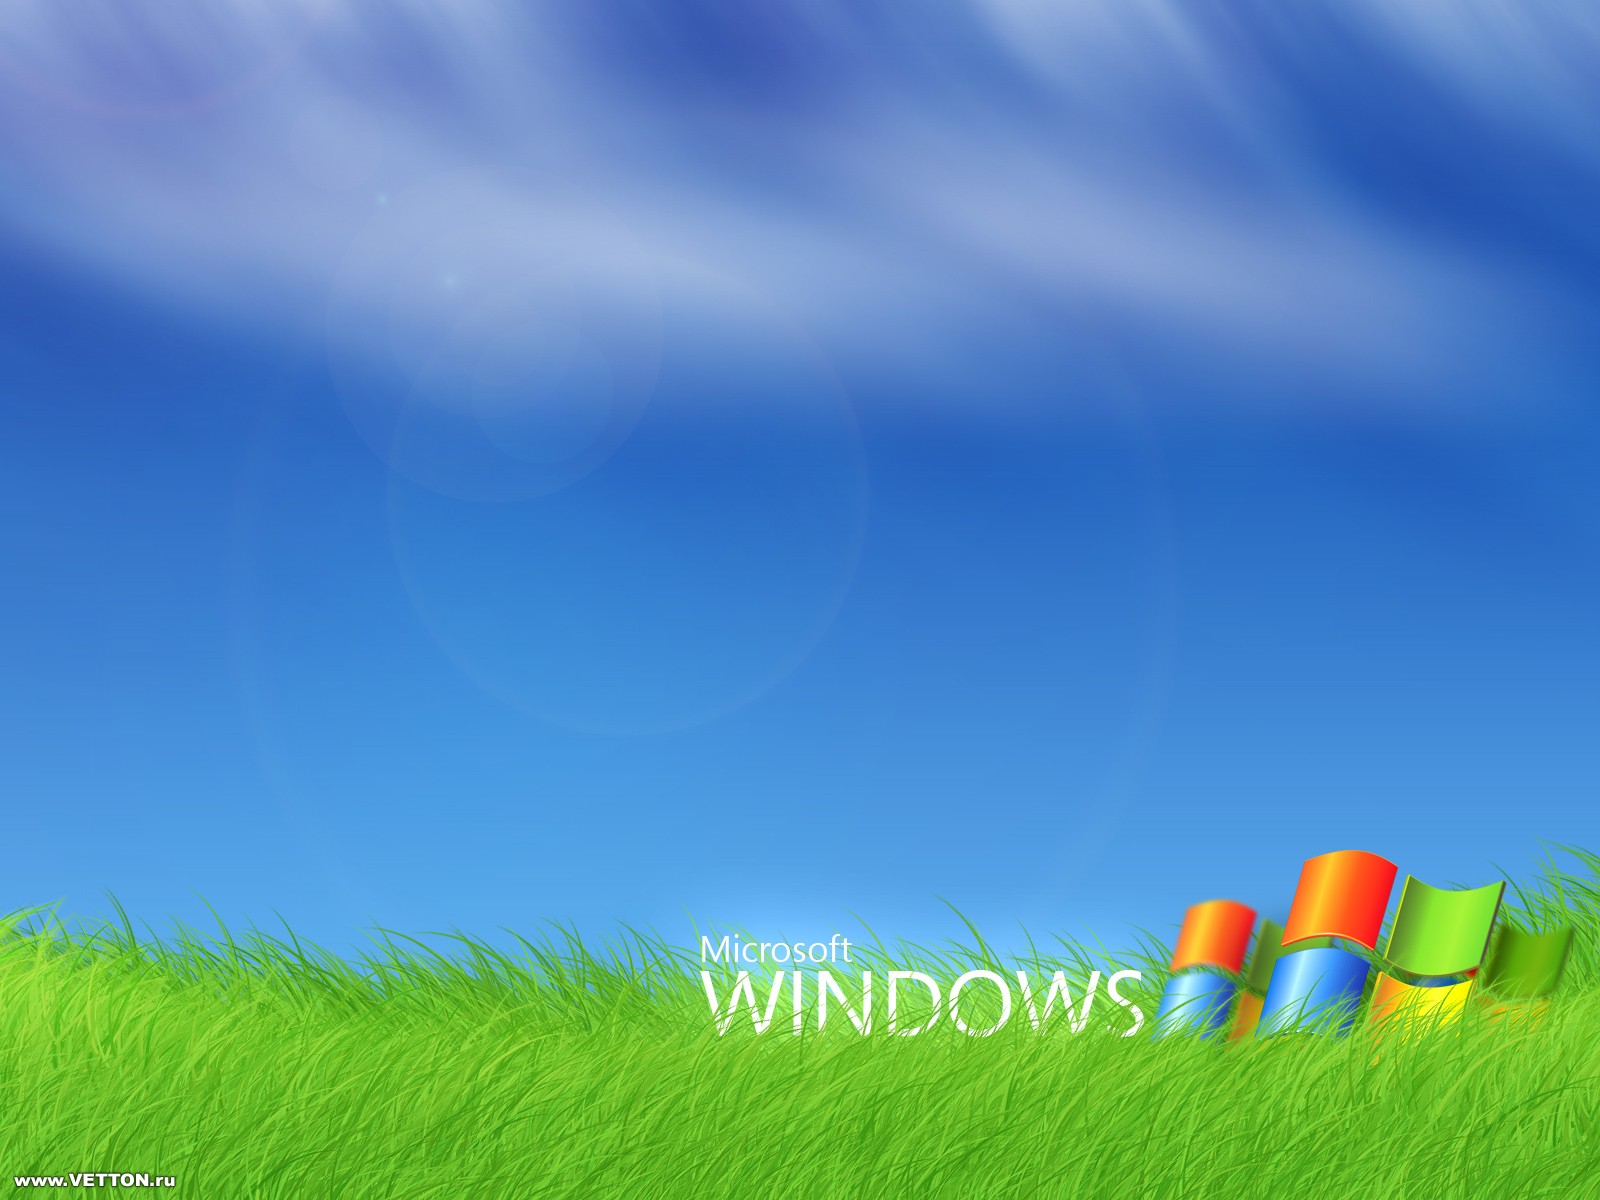 Windows XP Logo Wallpaper - WallpaperSafari